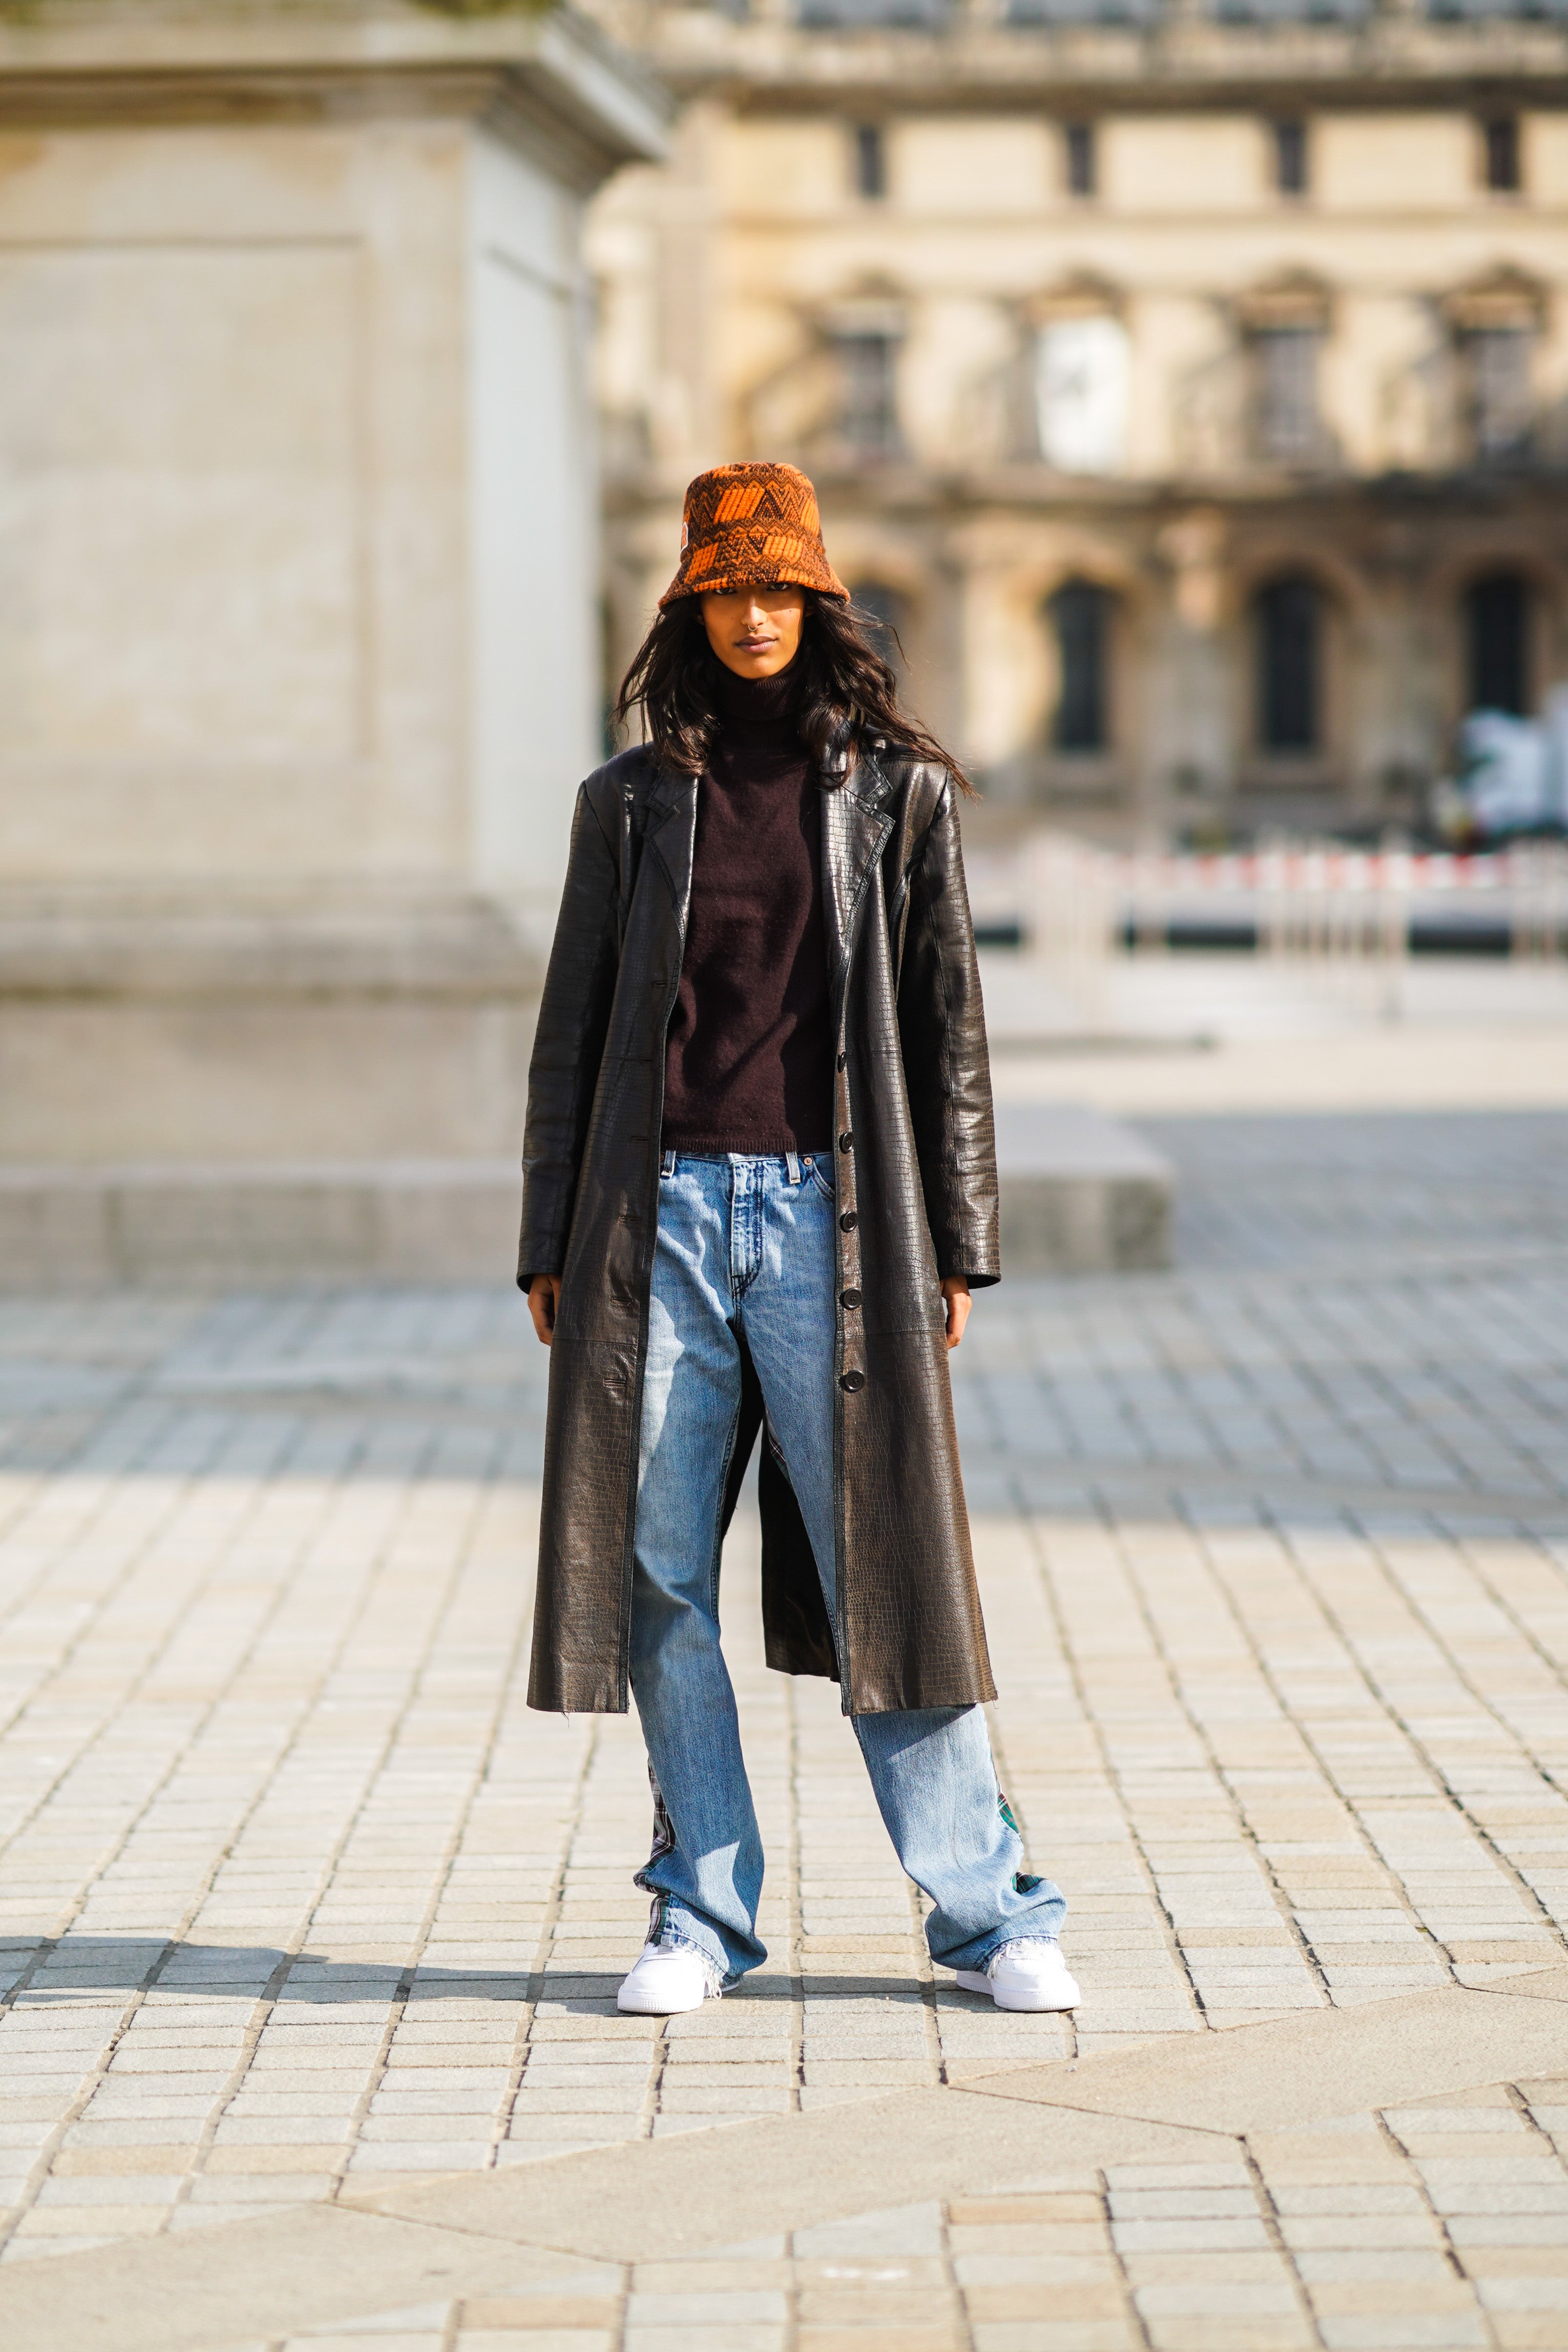 Lull Påstået ækvator Paris Street Style Fall 2021 Was All About Baggy Jeans